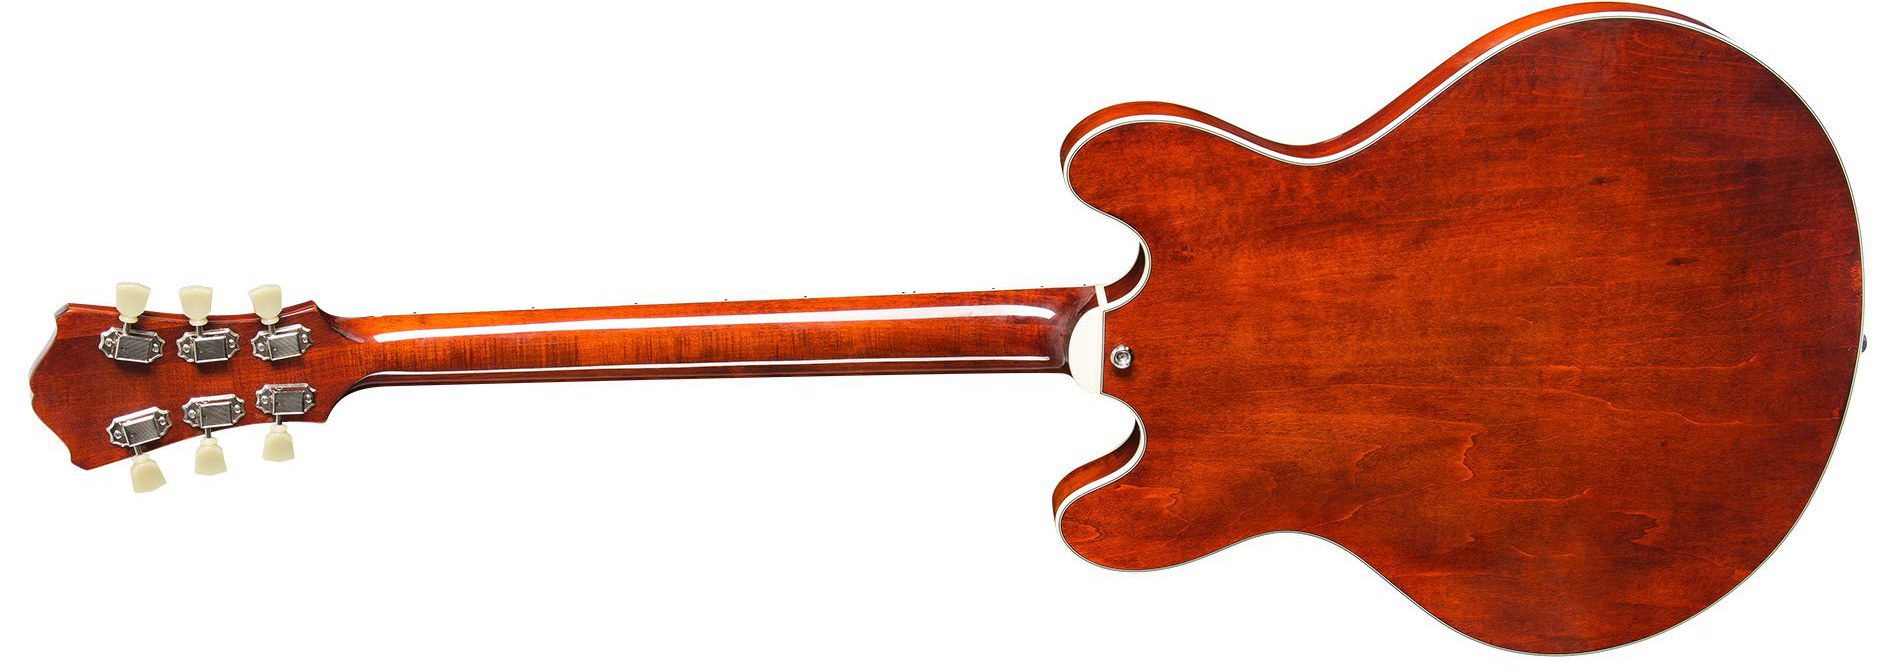 Eastman T386 Thinline Laminate Tout Erable Ht Eb - Classic - Semi-hollow electric guitar - Variation 1